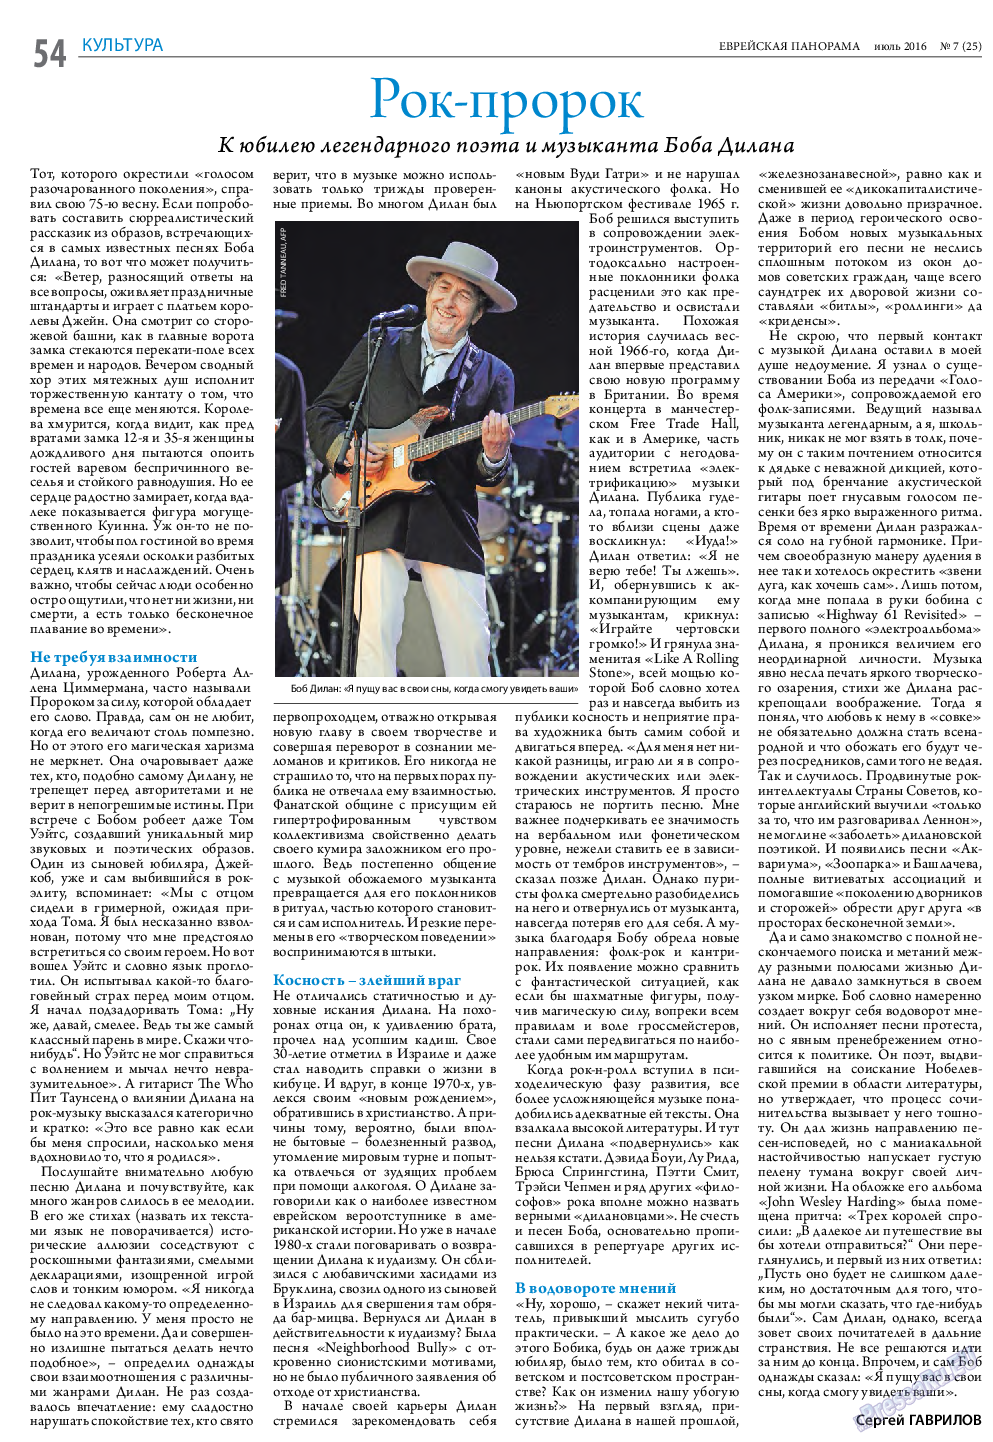 Еврейская панорама, газета. 2016 №7 стр.54